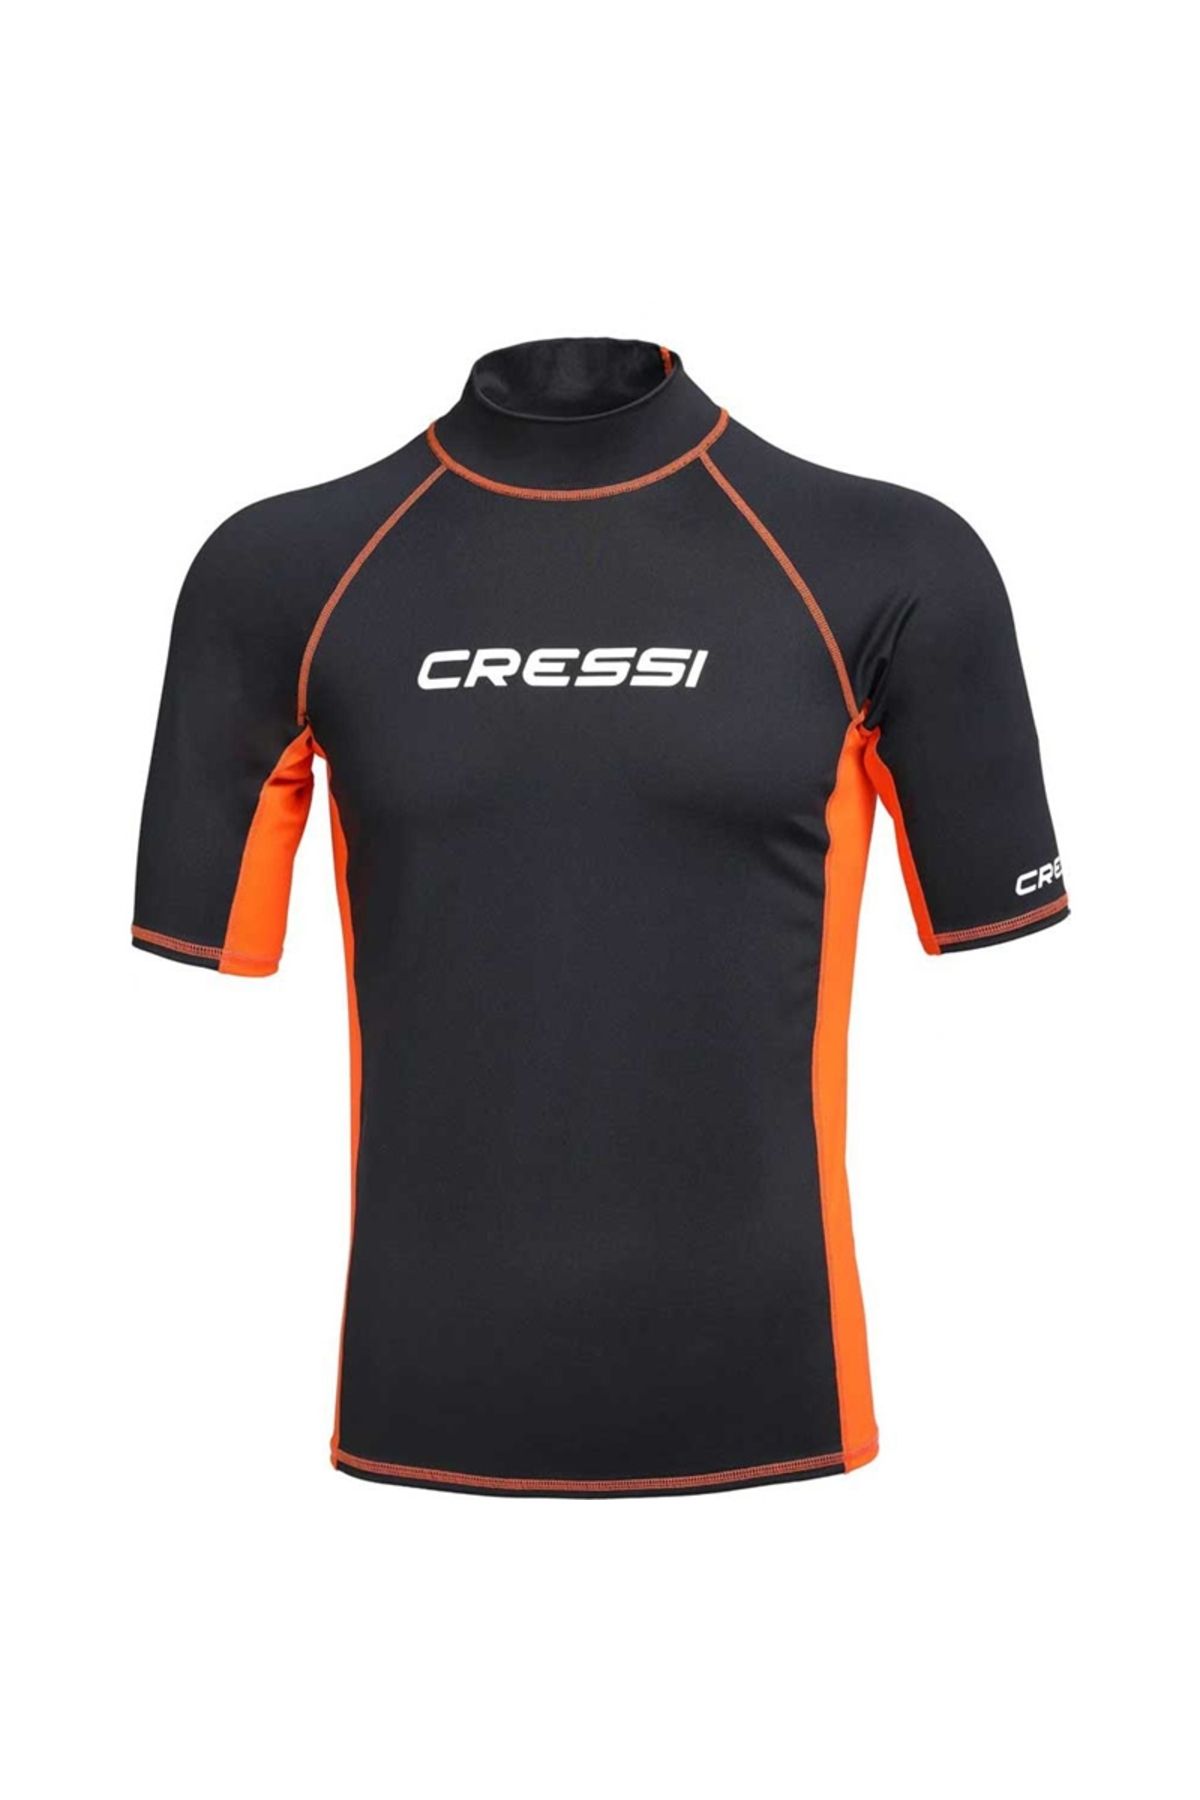 cressi sub Rash Guard Man T-Shirt BLACK - ORANGE-XL - NO:5